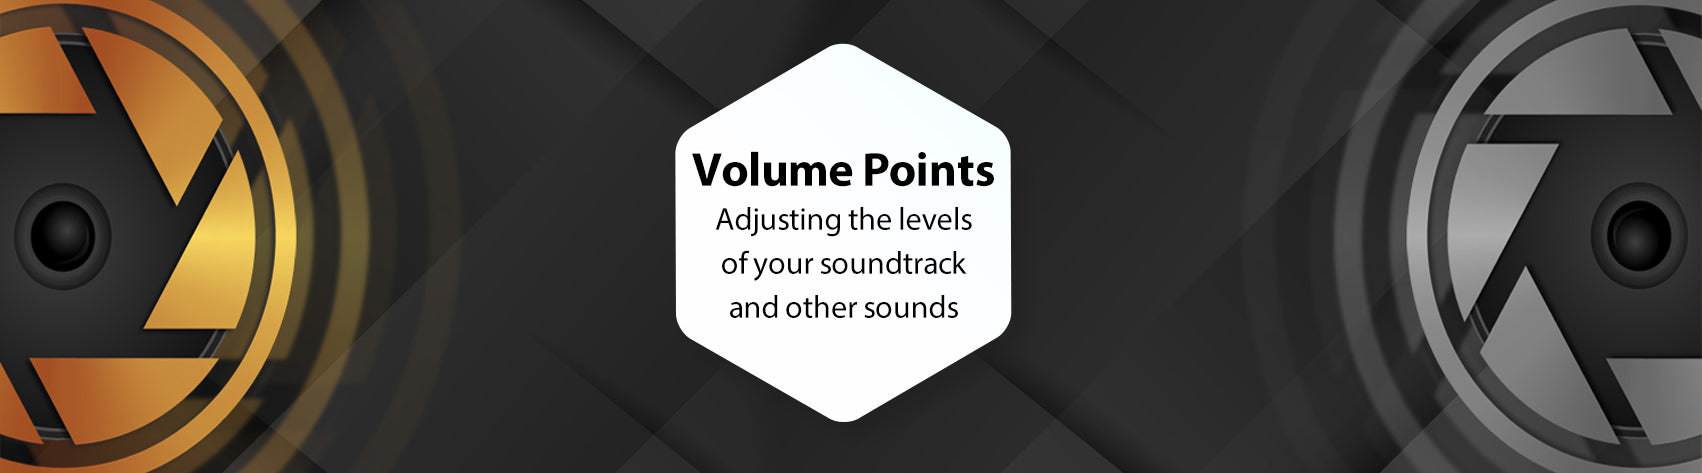 Tutorial - Volume Points